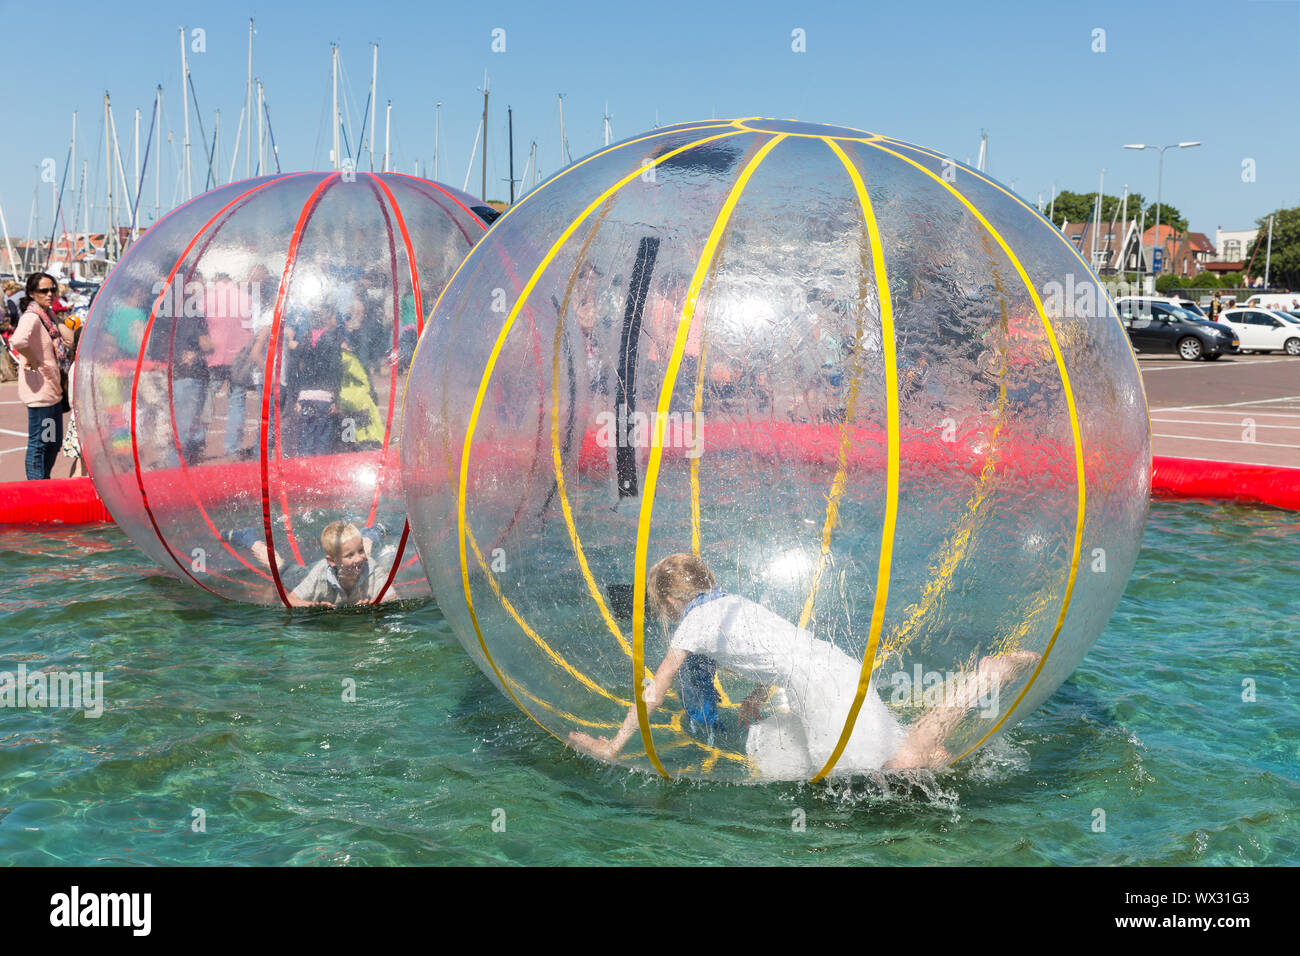 Ondraaglijk Verdikken Productie Children have fun inside plastic balloons on the water during a fishing  fare Stock Photo - Alamy